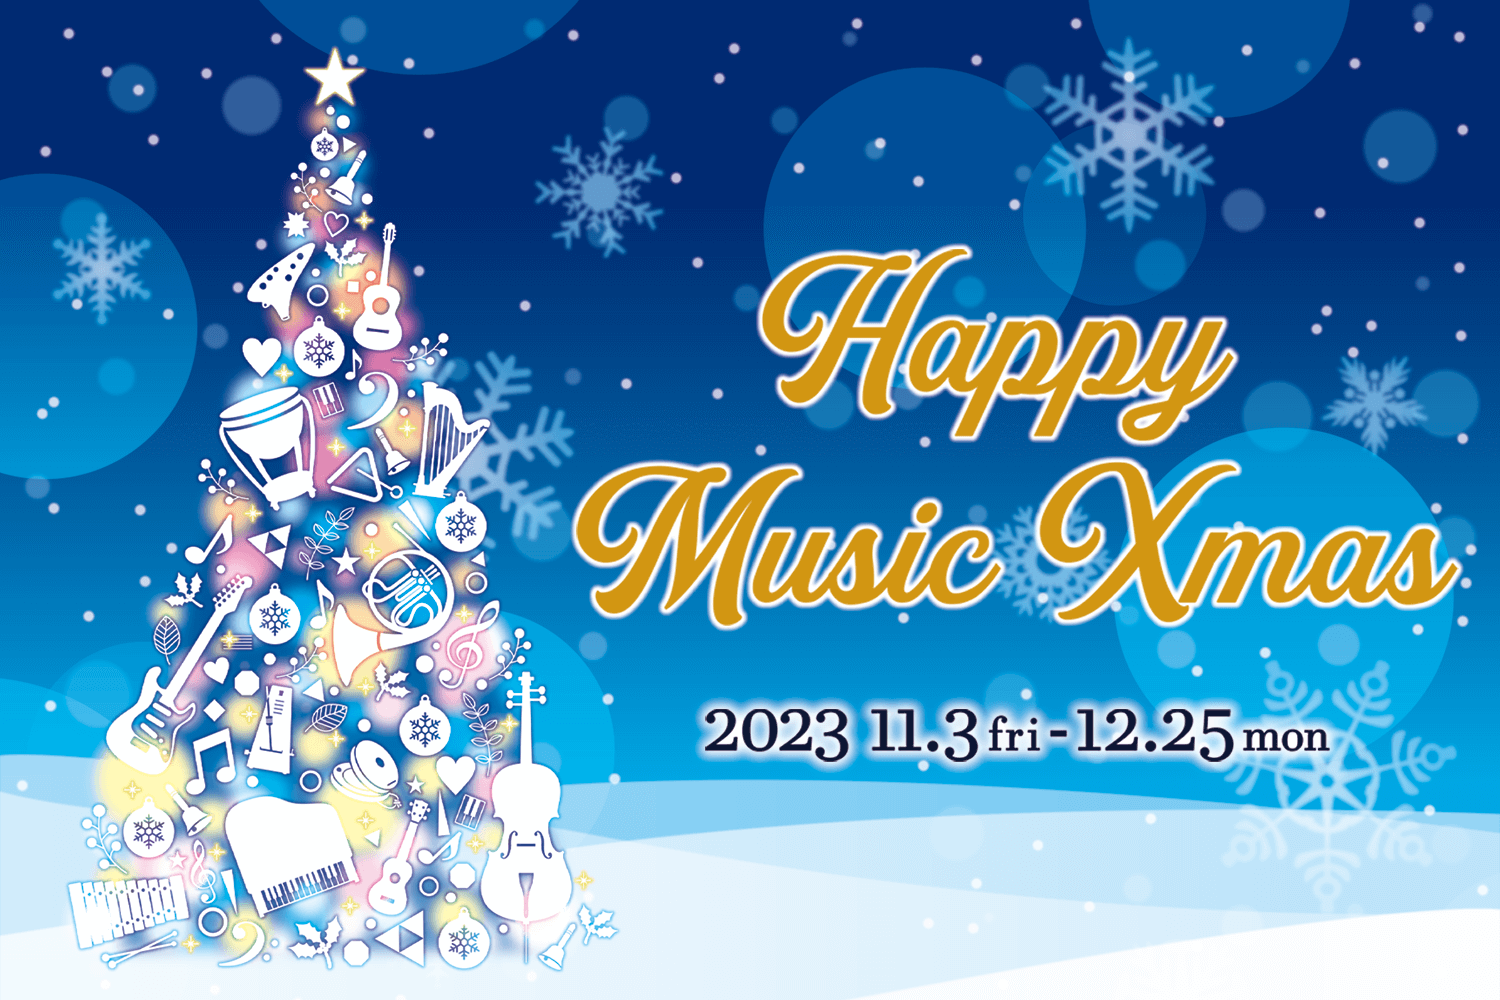 Happy Music X'mas 2023.11.3 fry ～ 12.25 mon